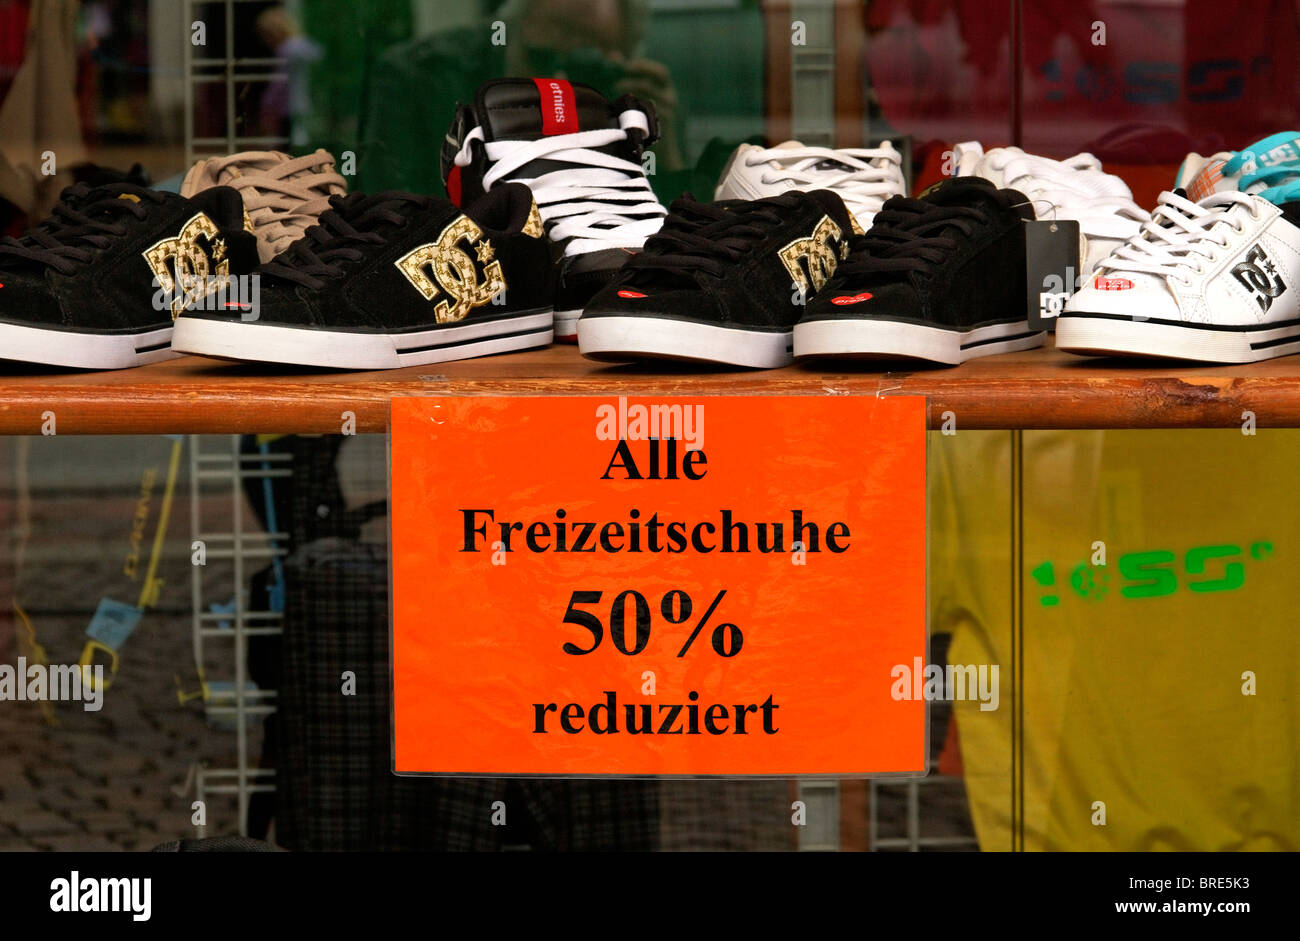 German 50% off Summer Shoe Sale Stock Photo